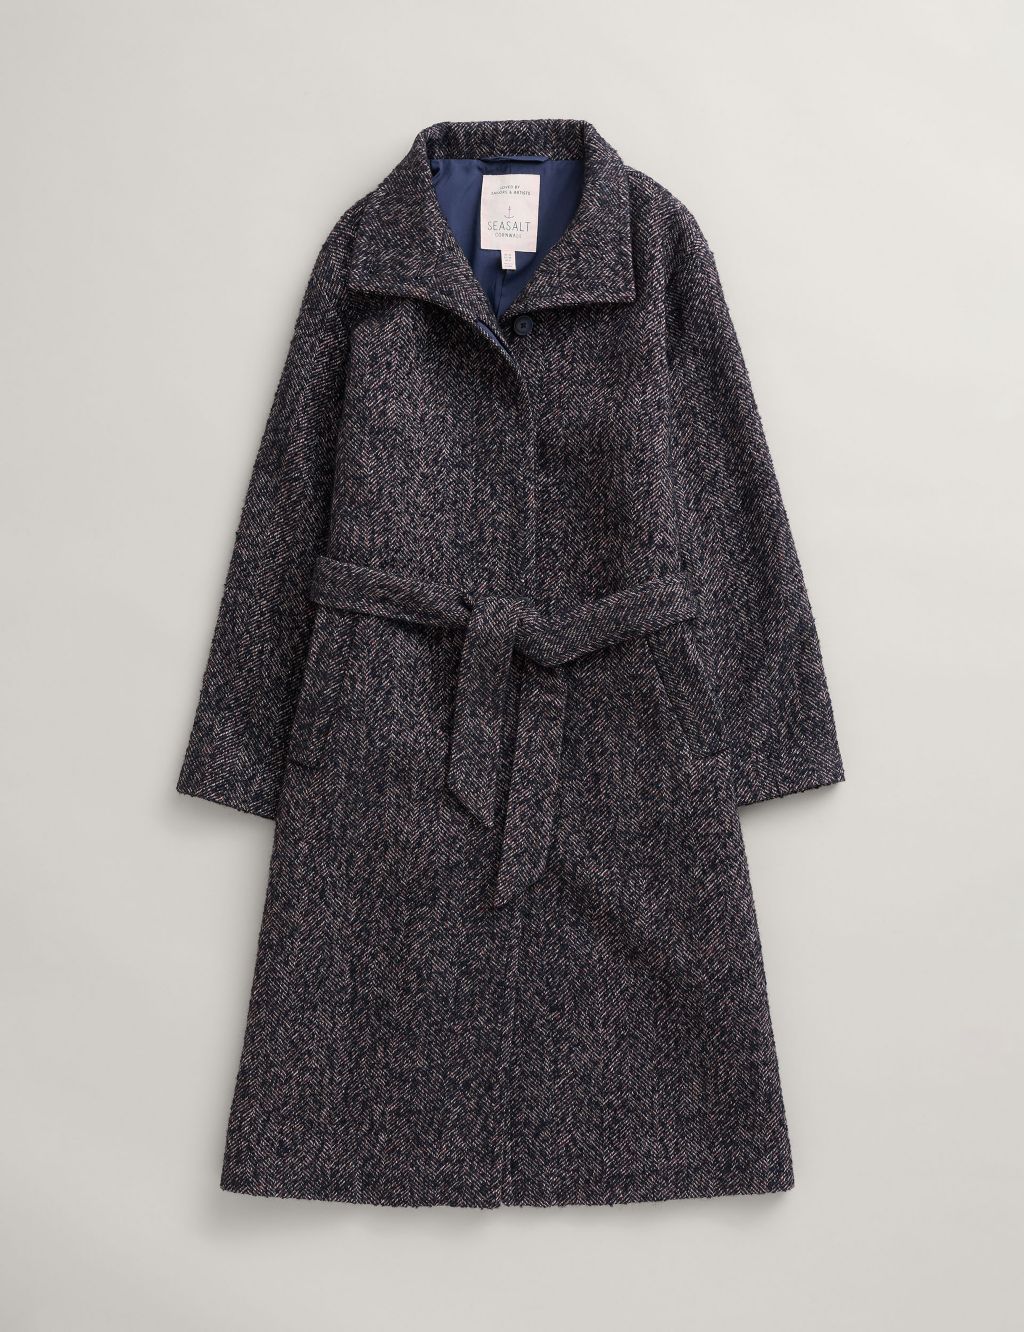 Wool Blend Textured Belted Longline Coat image 2